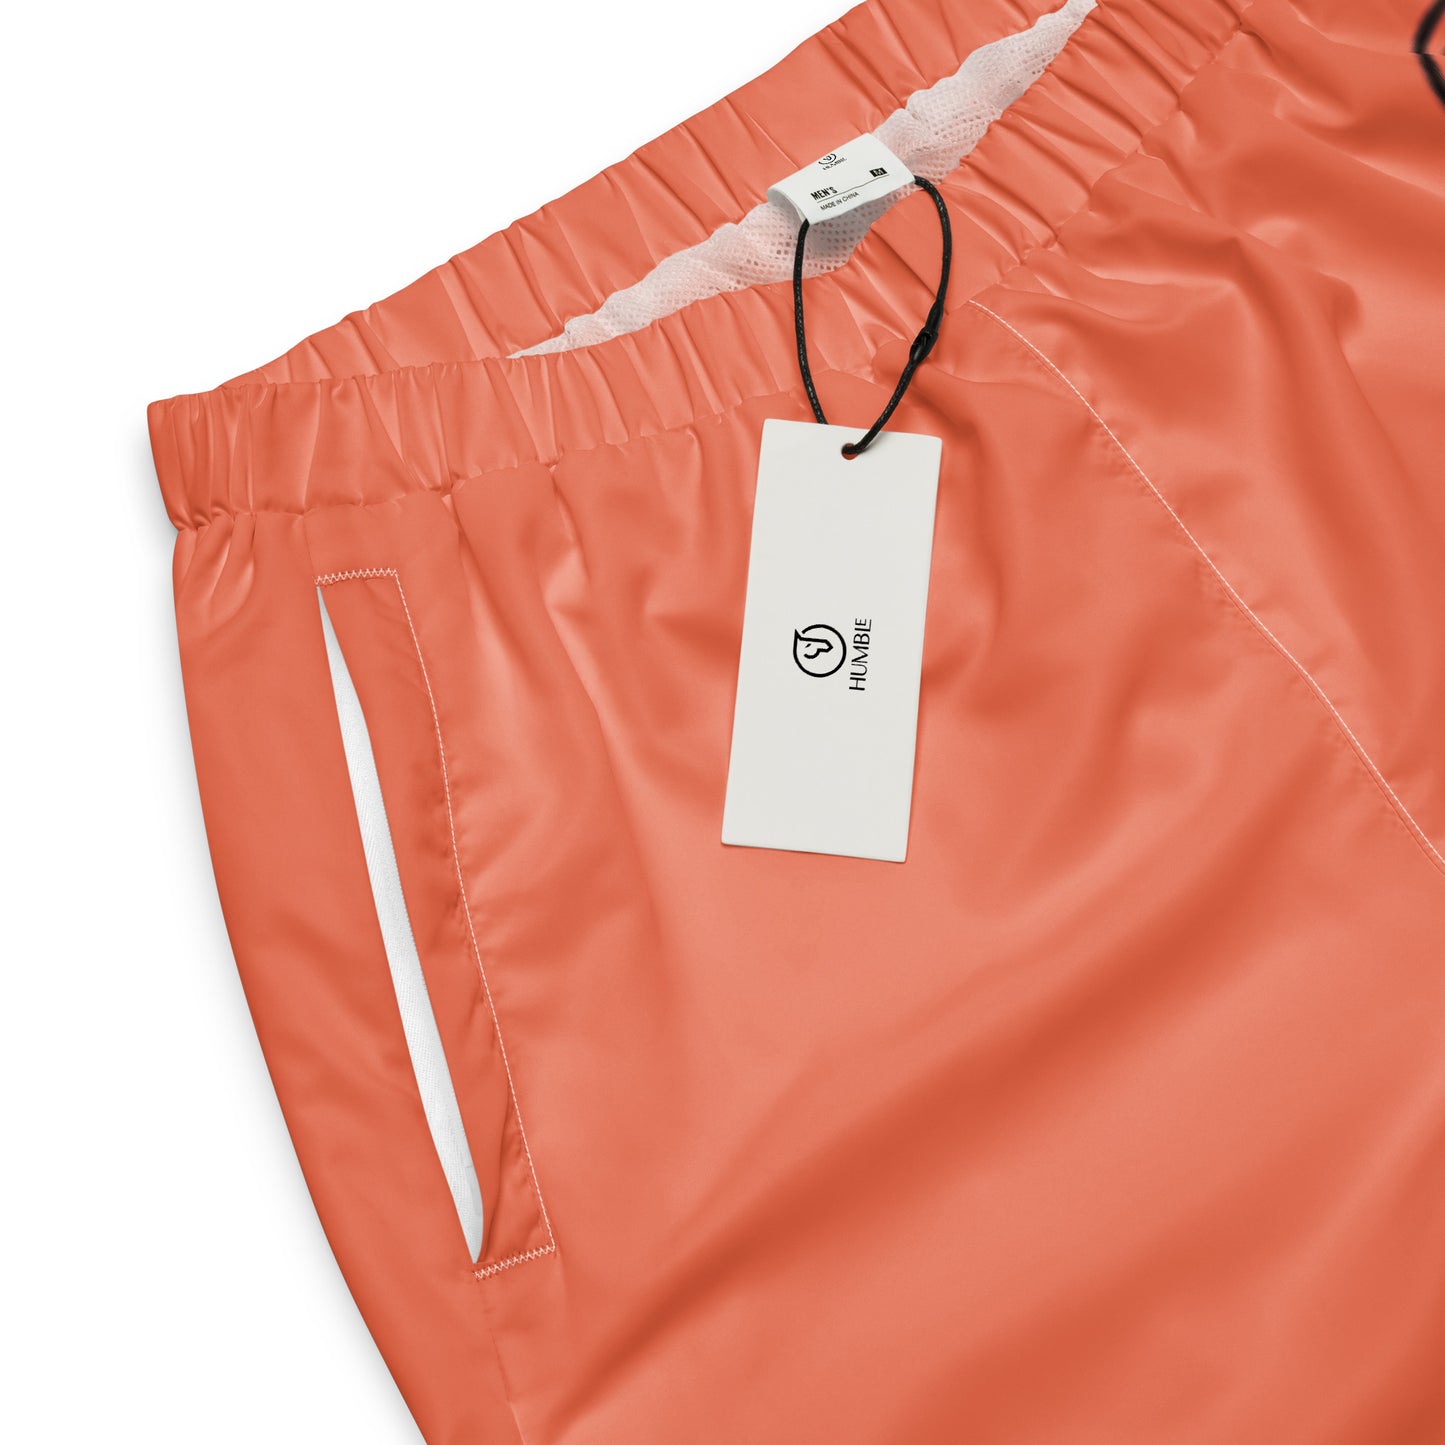 Humble Sportswear™ Women's Coral Lightweight Track Pants - Mireille Fine Art